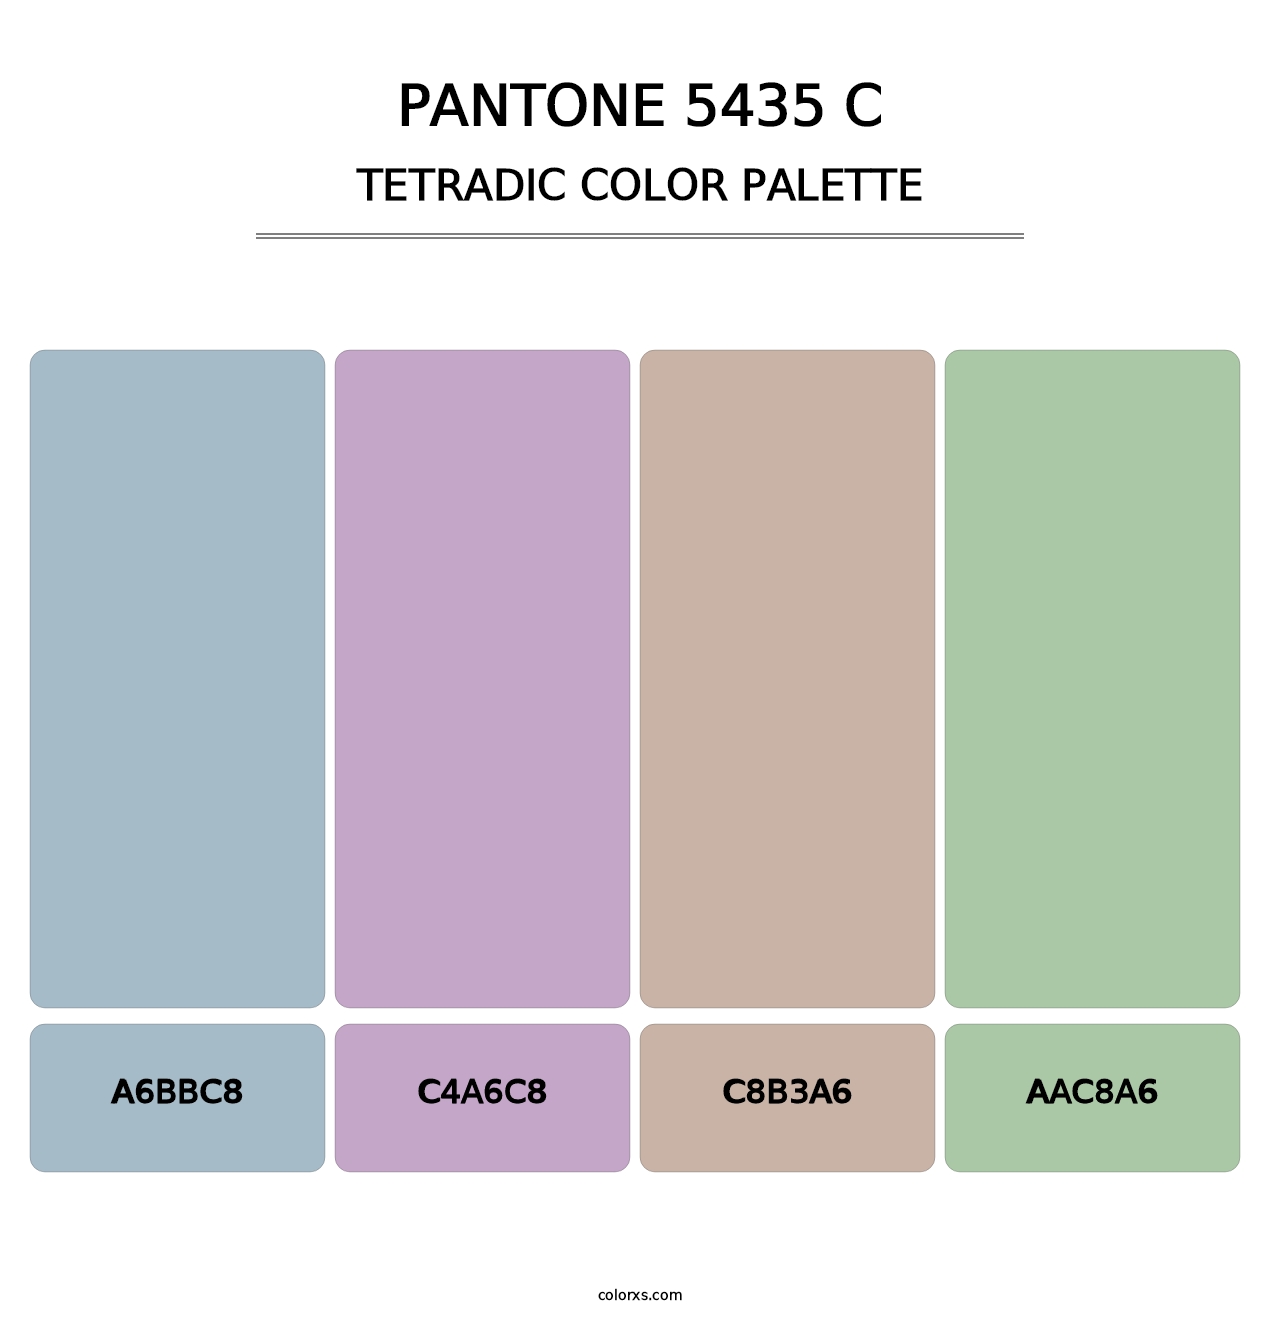 PANTONE 5435 C - Tetradic Color Palette